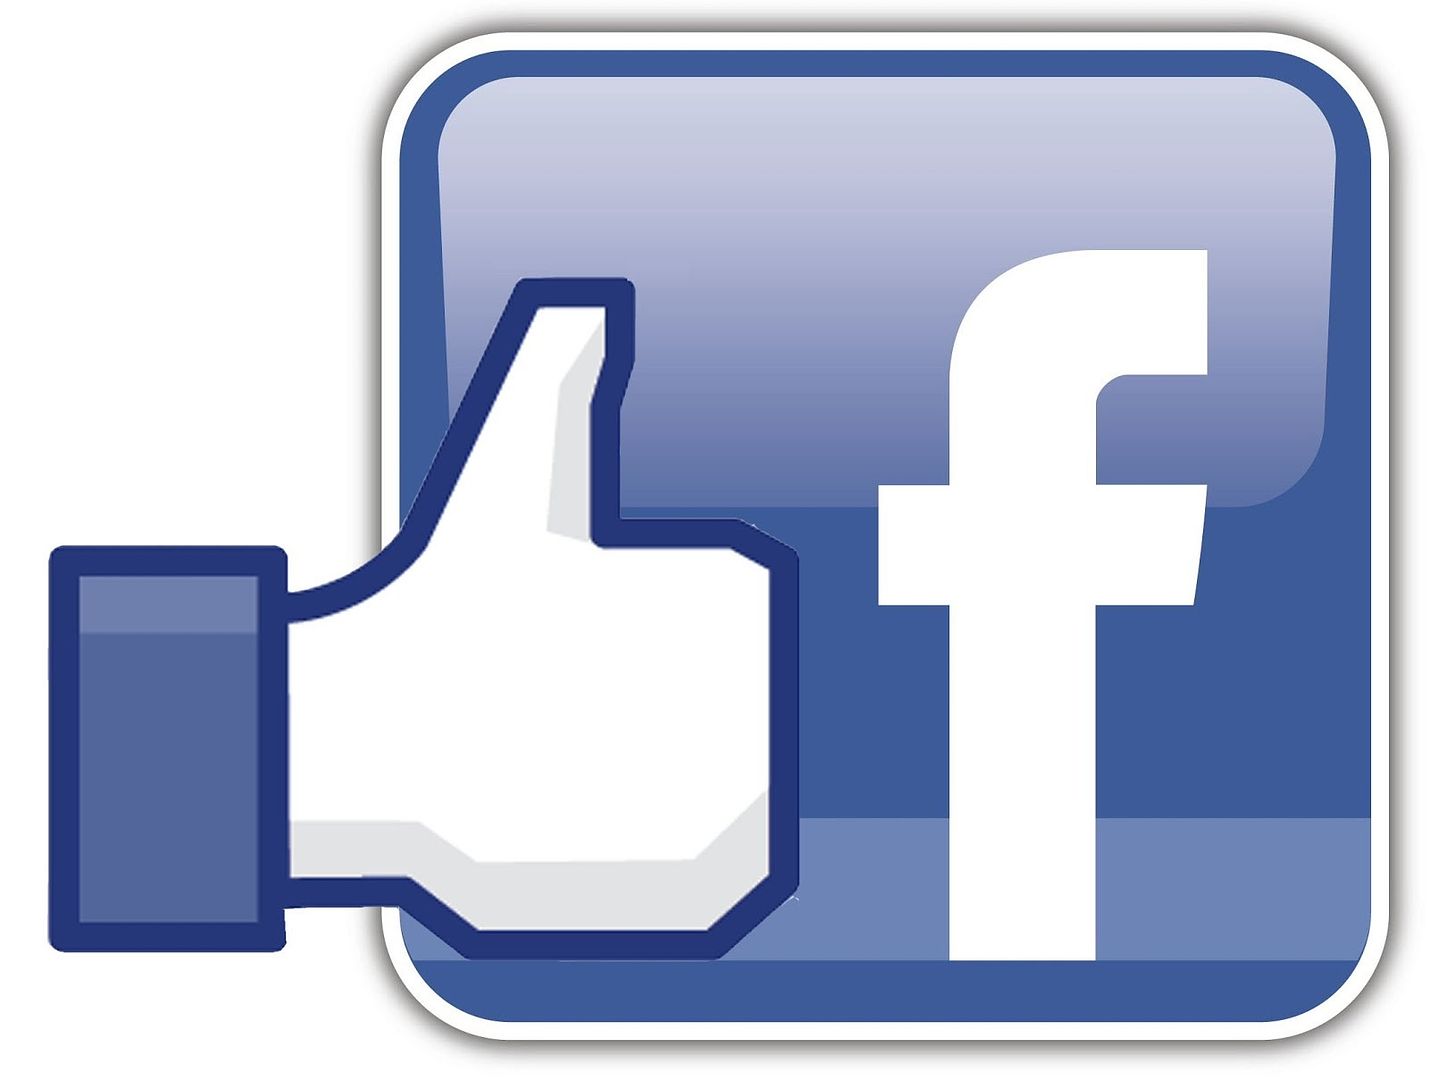  Social Media - Increase Your Facebook Reach with My Secret | The TipToe Fairy